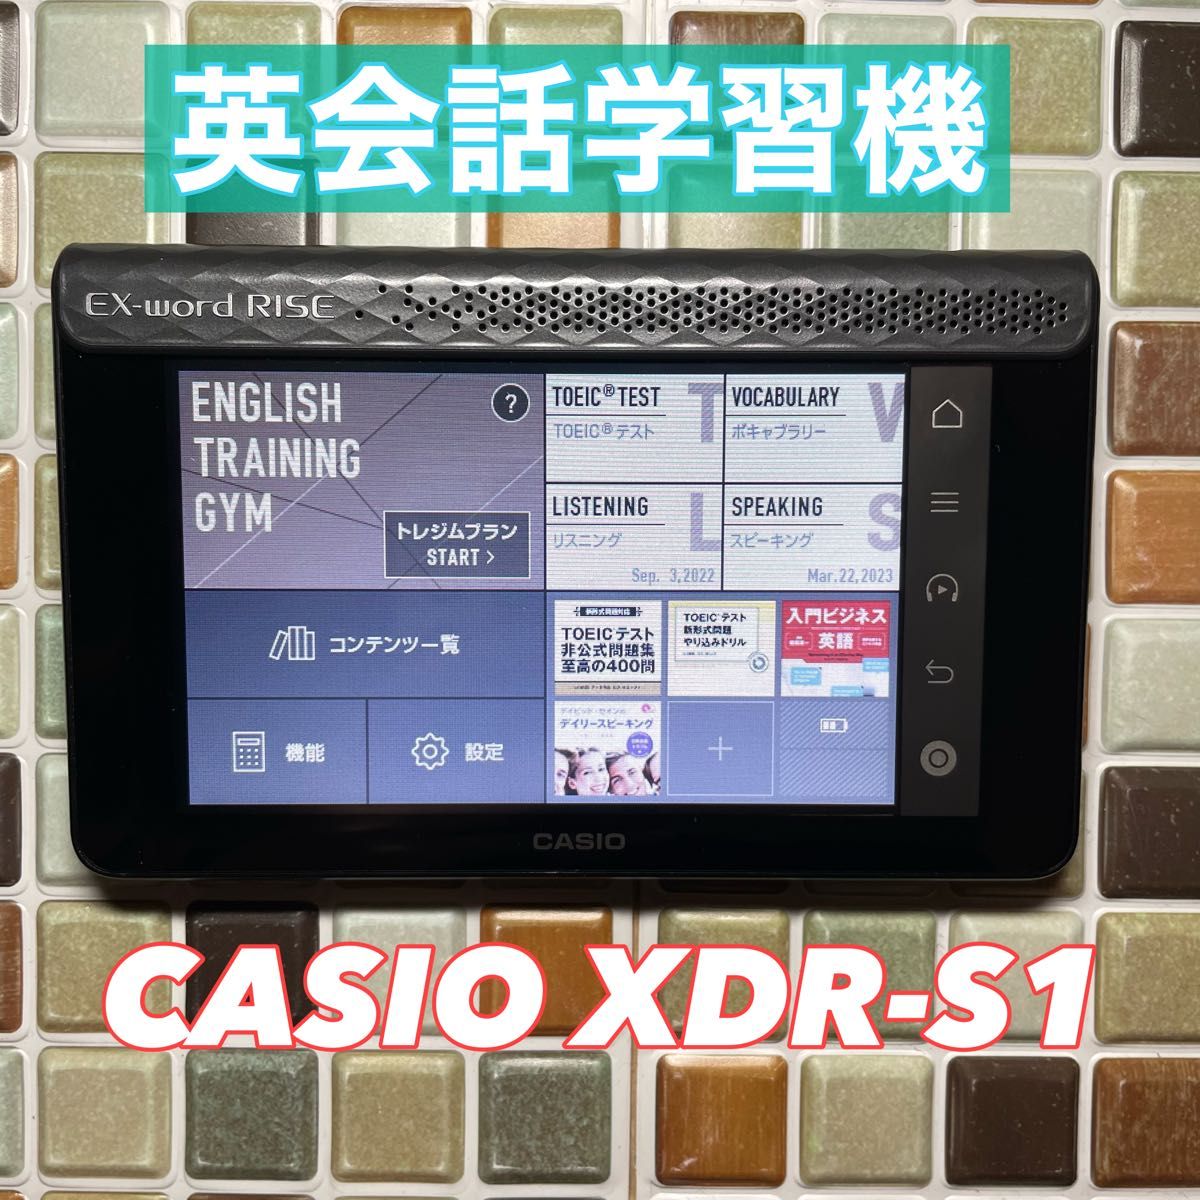 英会話学習機 カシオEX-word RISE XDR-S1 - 日用品/生活雑貨/旅行